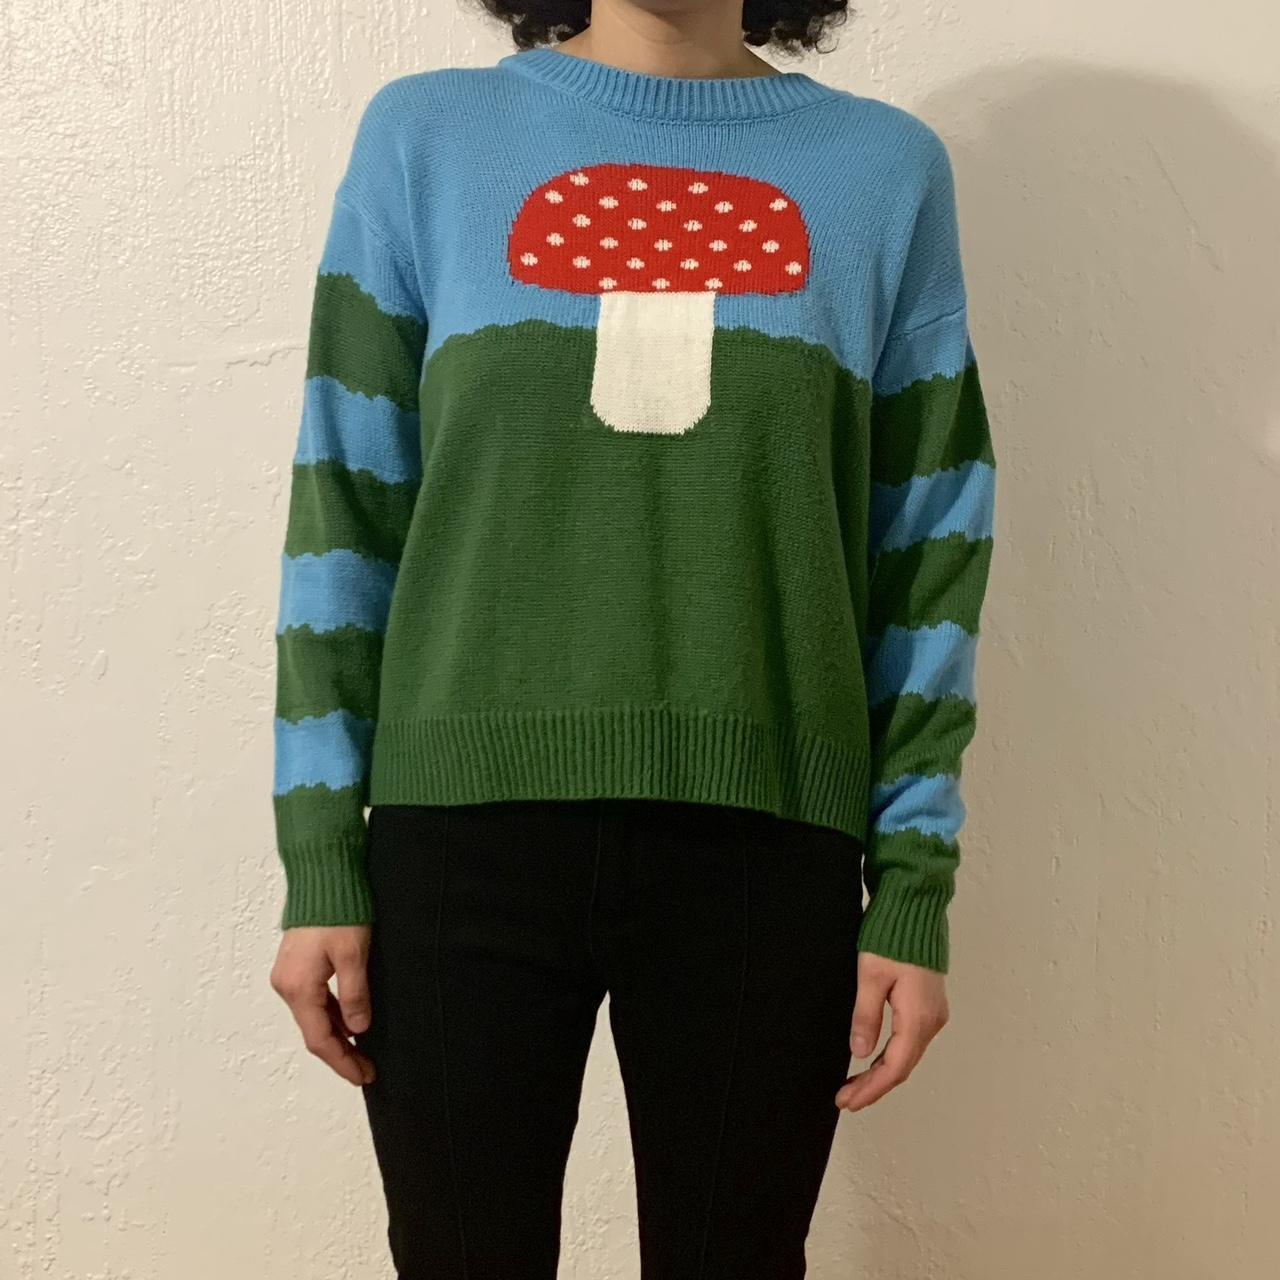 shroomie sweater 🍄 - Depop